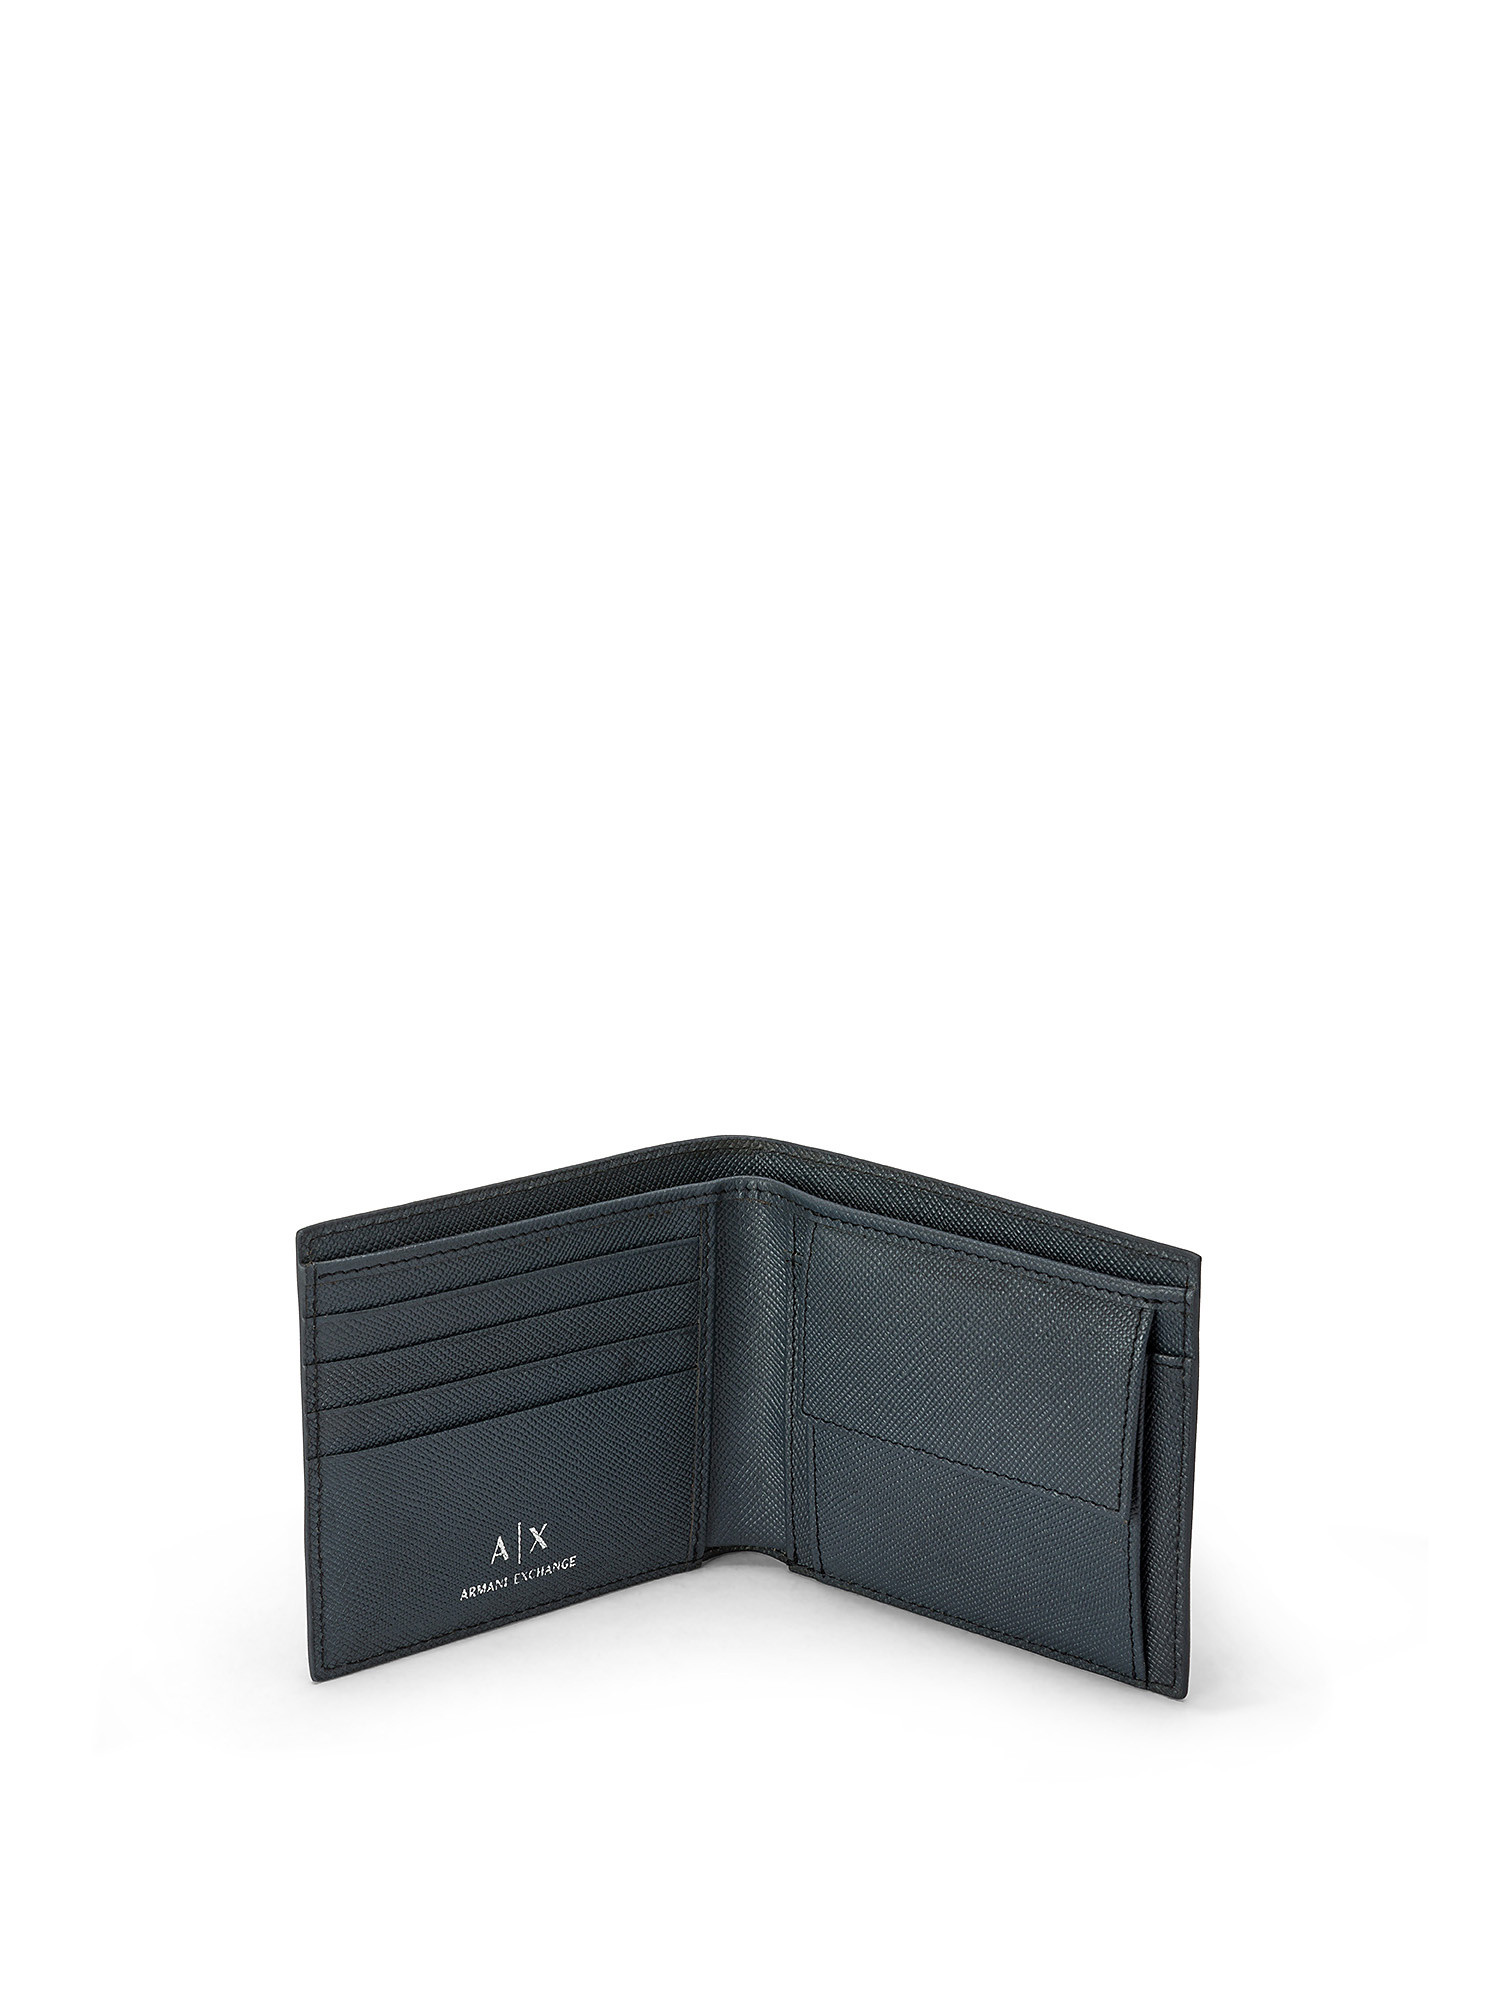 Armani Exchange - Leather wallet, Blue, large image number 2